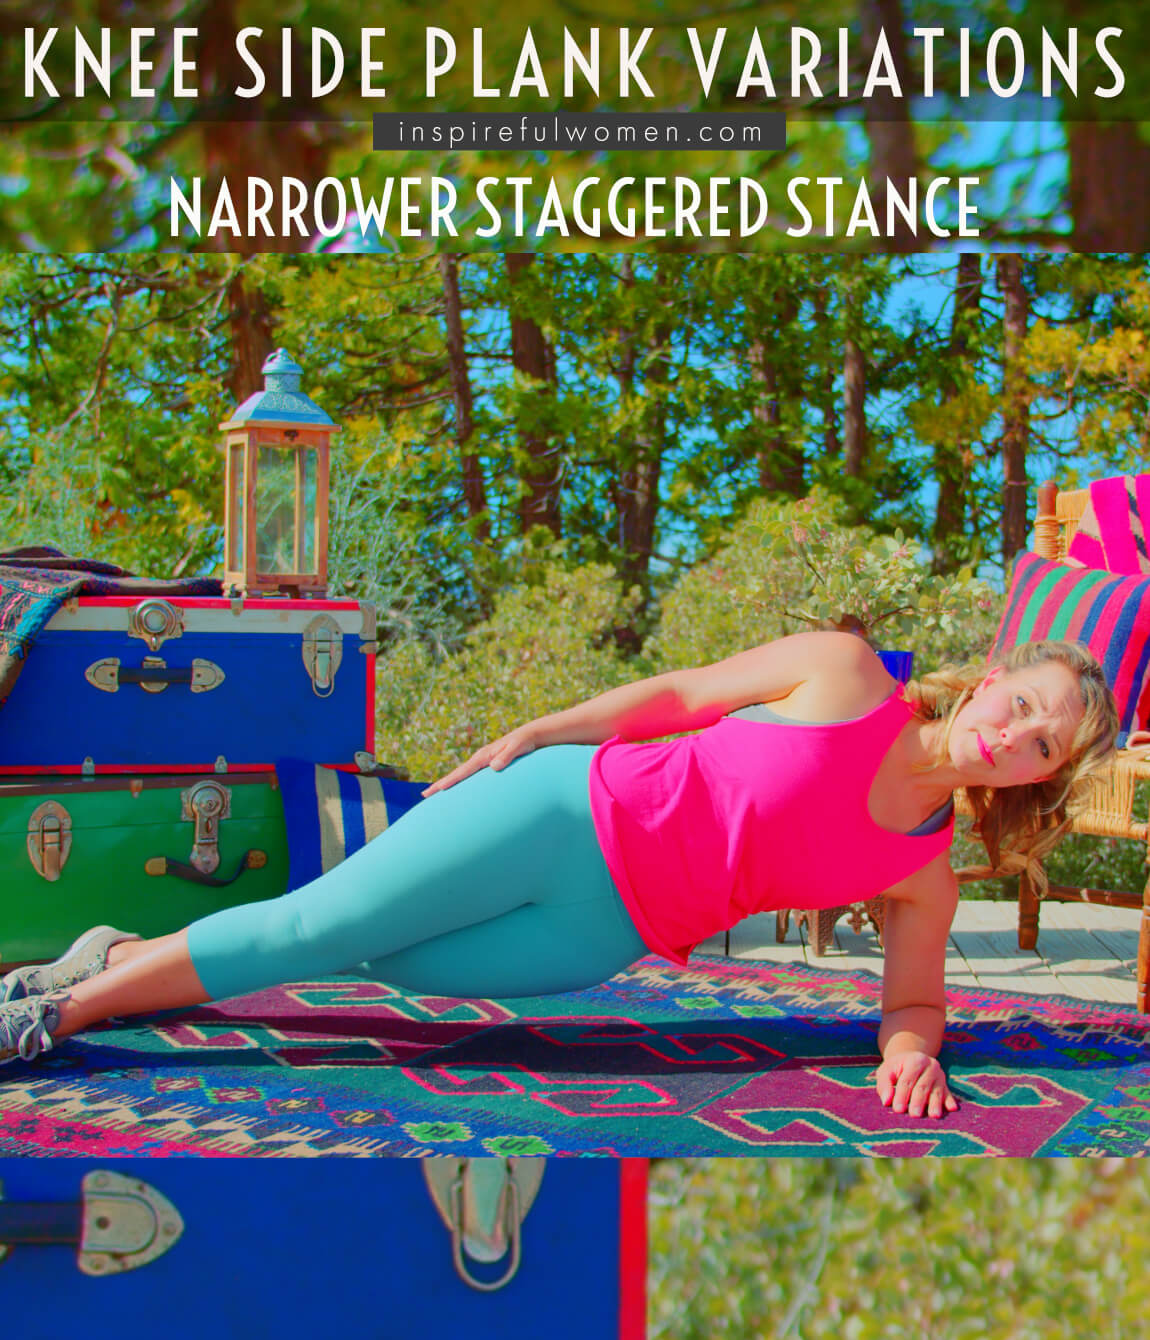 narrower-staggered-stance-knee-side-planks-exercise-variation